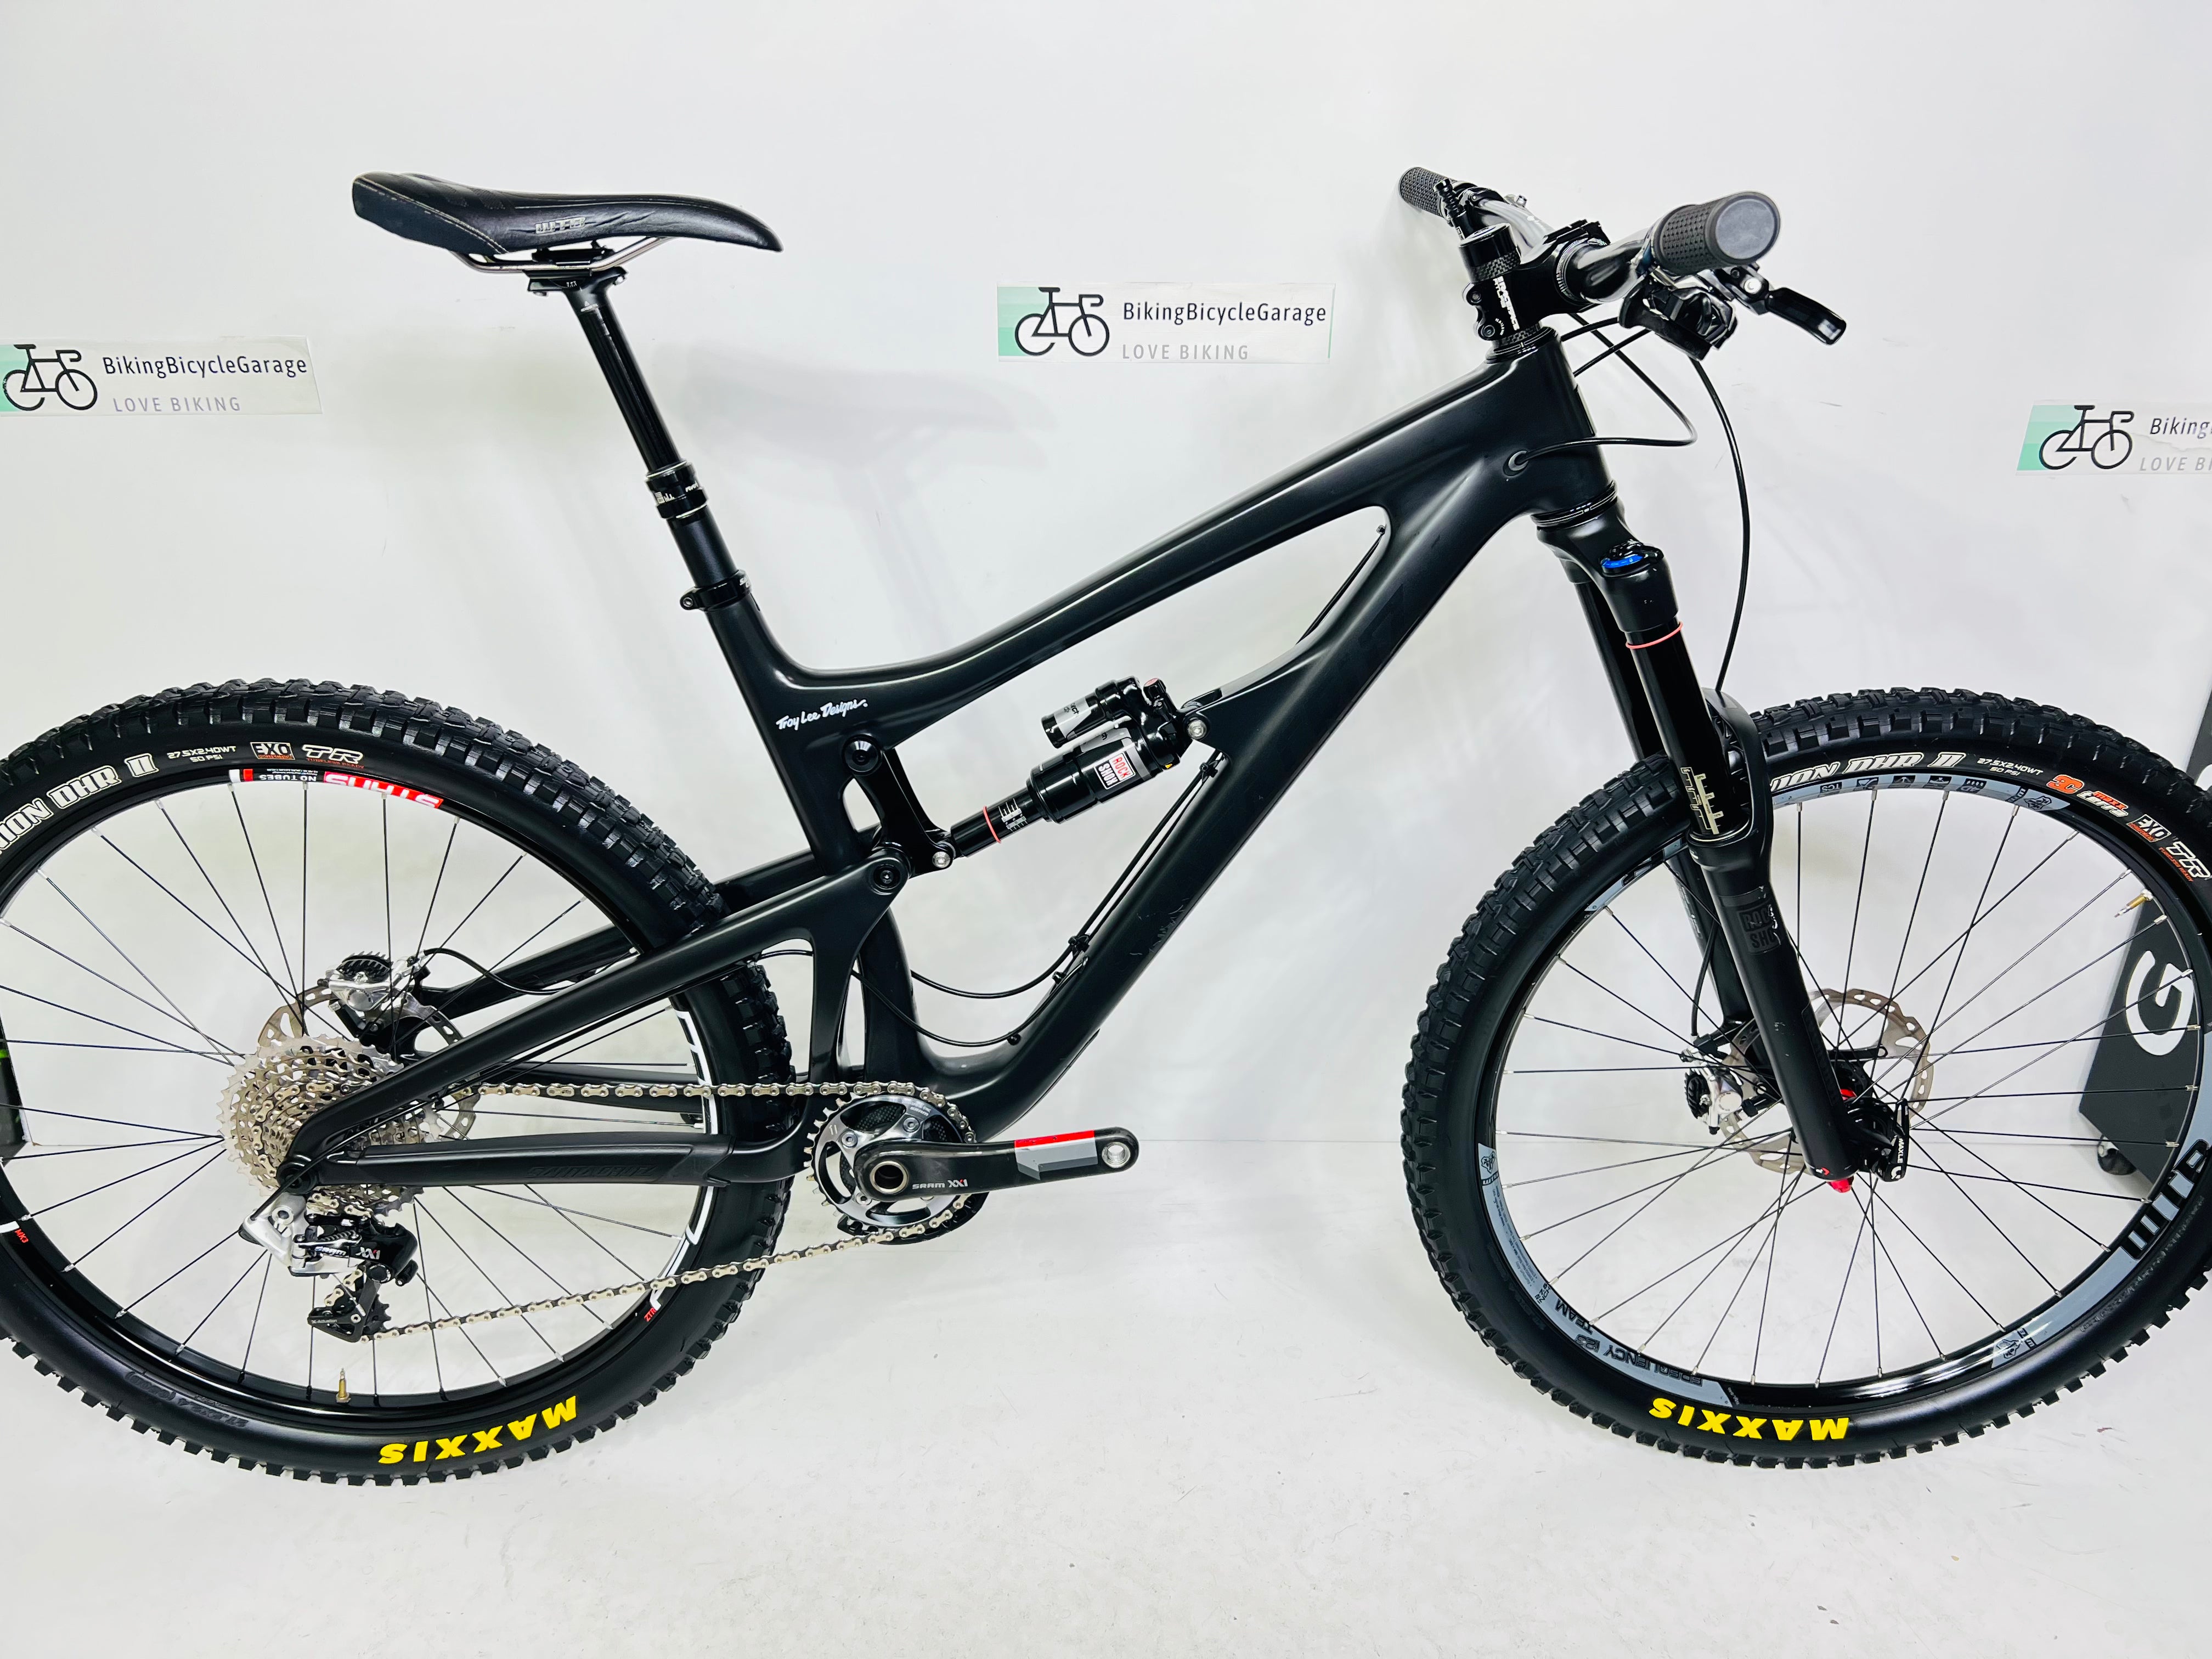 Santa Cruz Nomad C Carbon Fiber Mountain Bike-2015, Large, XX1 / XTR